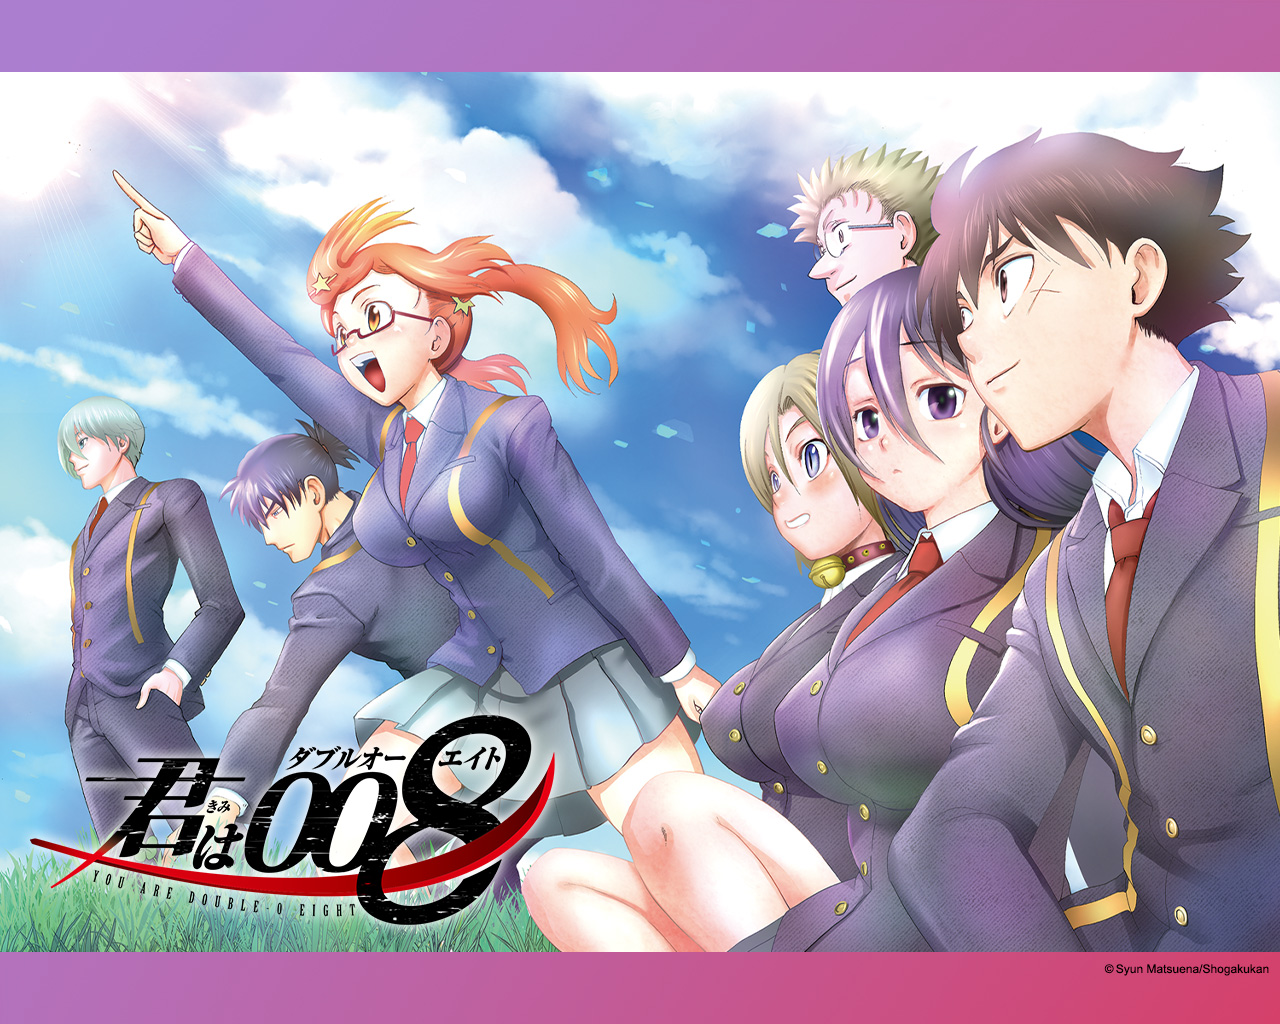 Shun Matsuena's Kimi wa 008 Manga Enters Climax - News - Anime